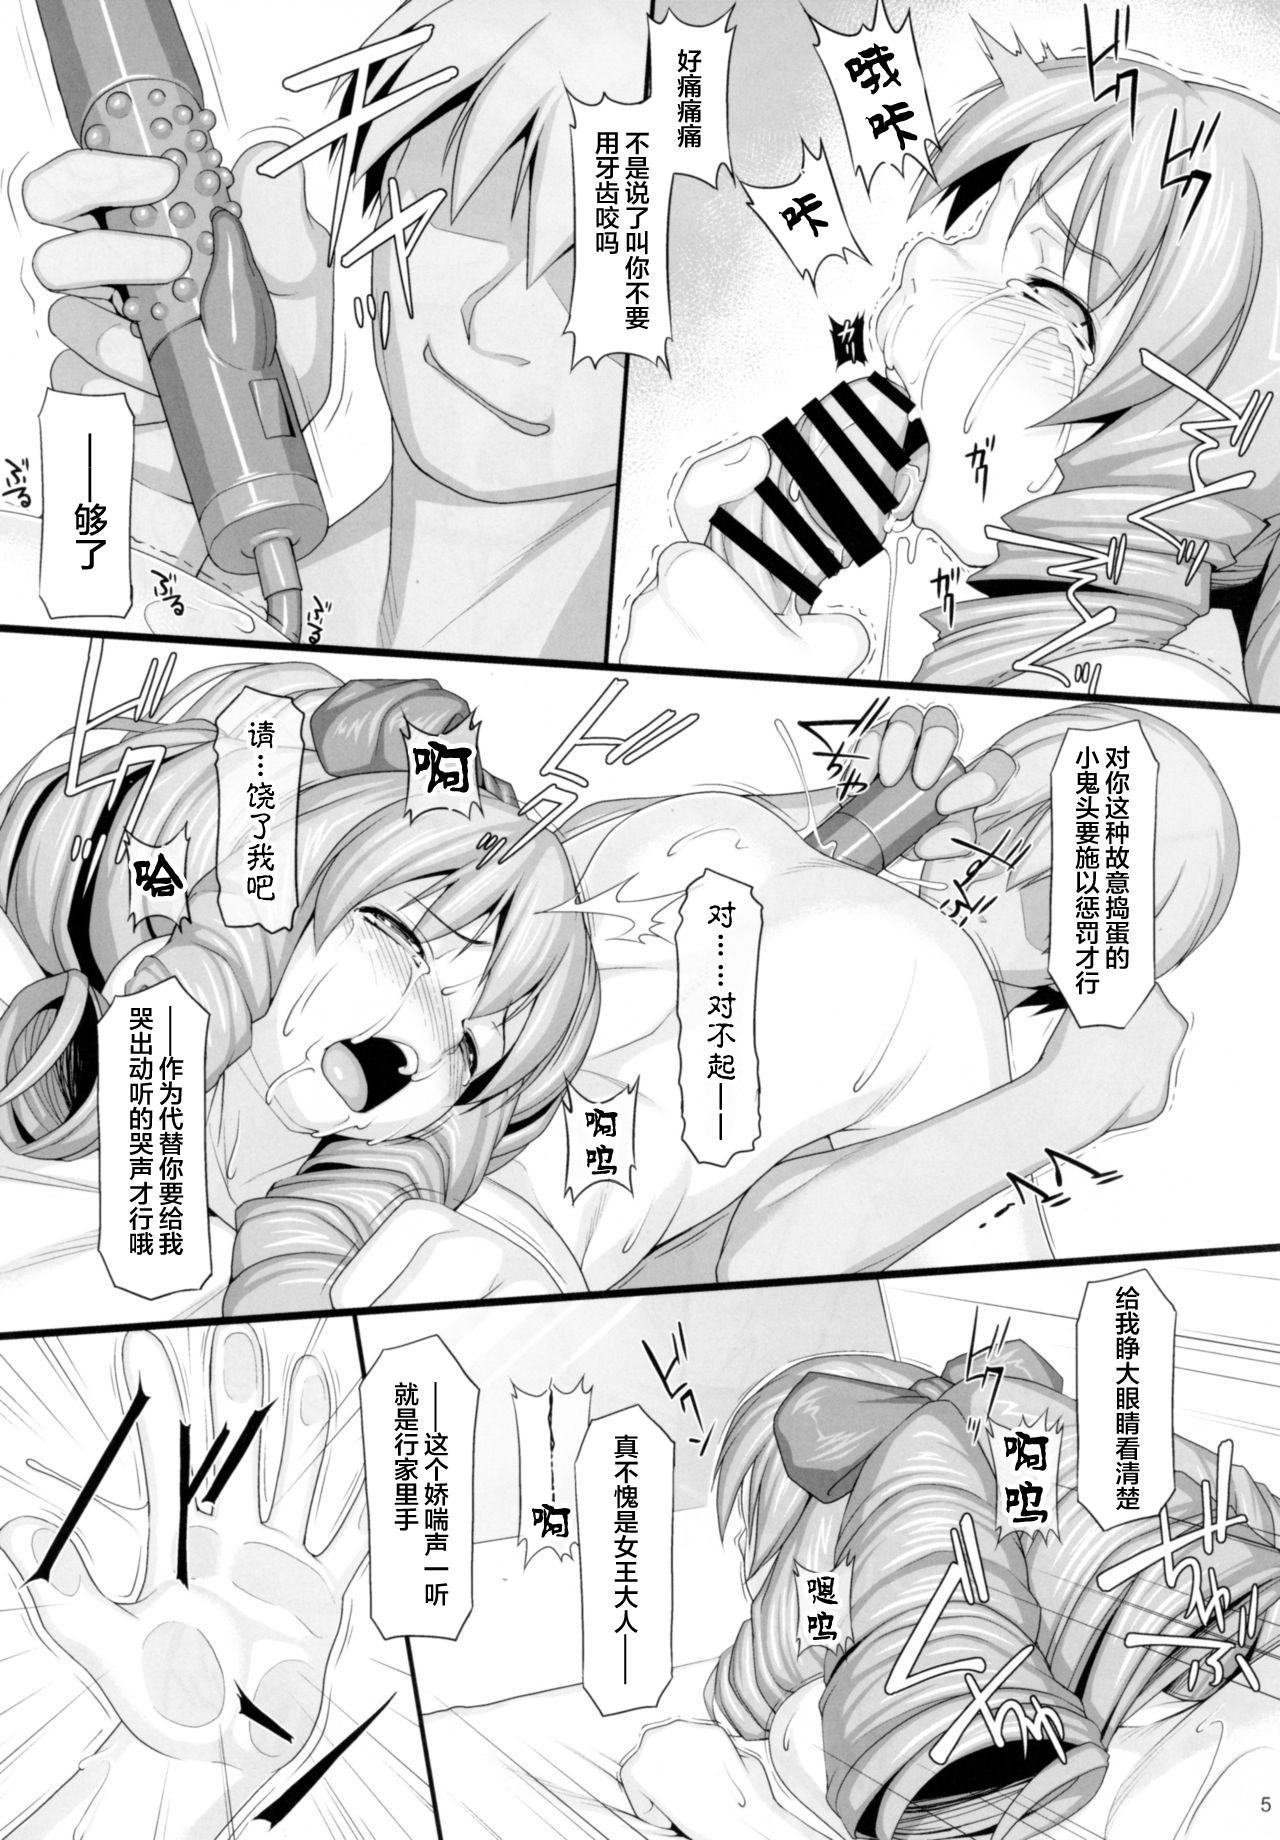 Erotica Shokuzai no Ma 8 - Xenogears Interracial - Page 4